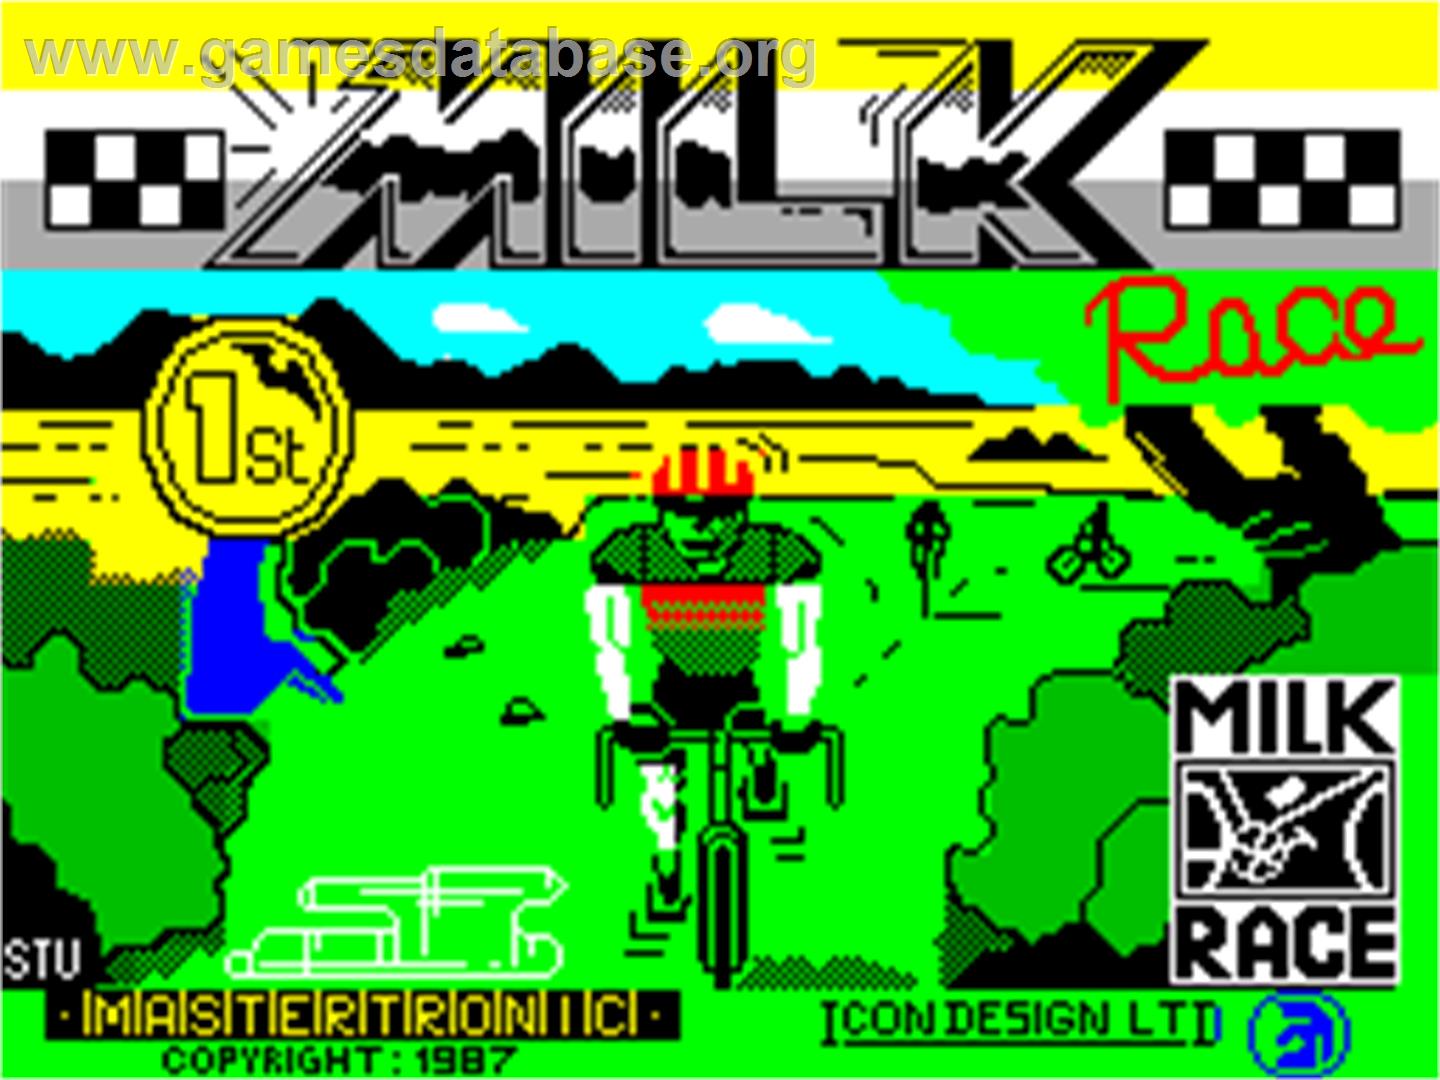 Milk Race - Sinclair ZX Spectrum - Artwork - Title Screen